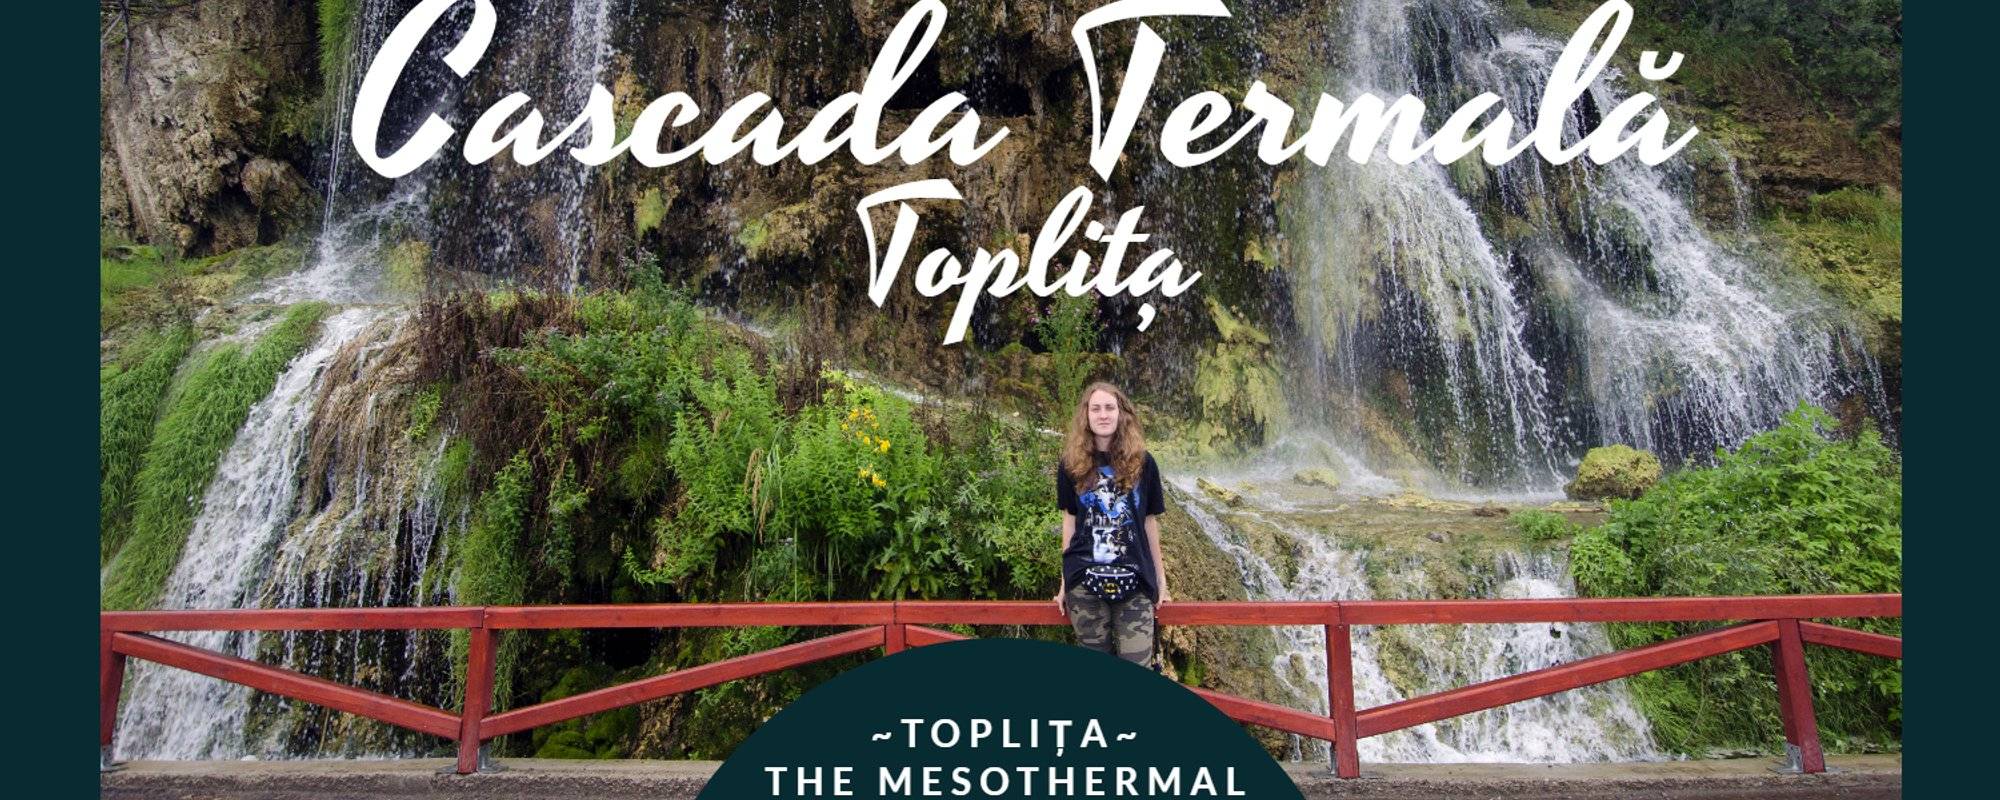 Let's travel together #100 - Cascada Termală Toplița (The Mesothermal Waterfall "Toplița")